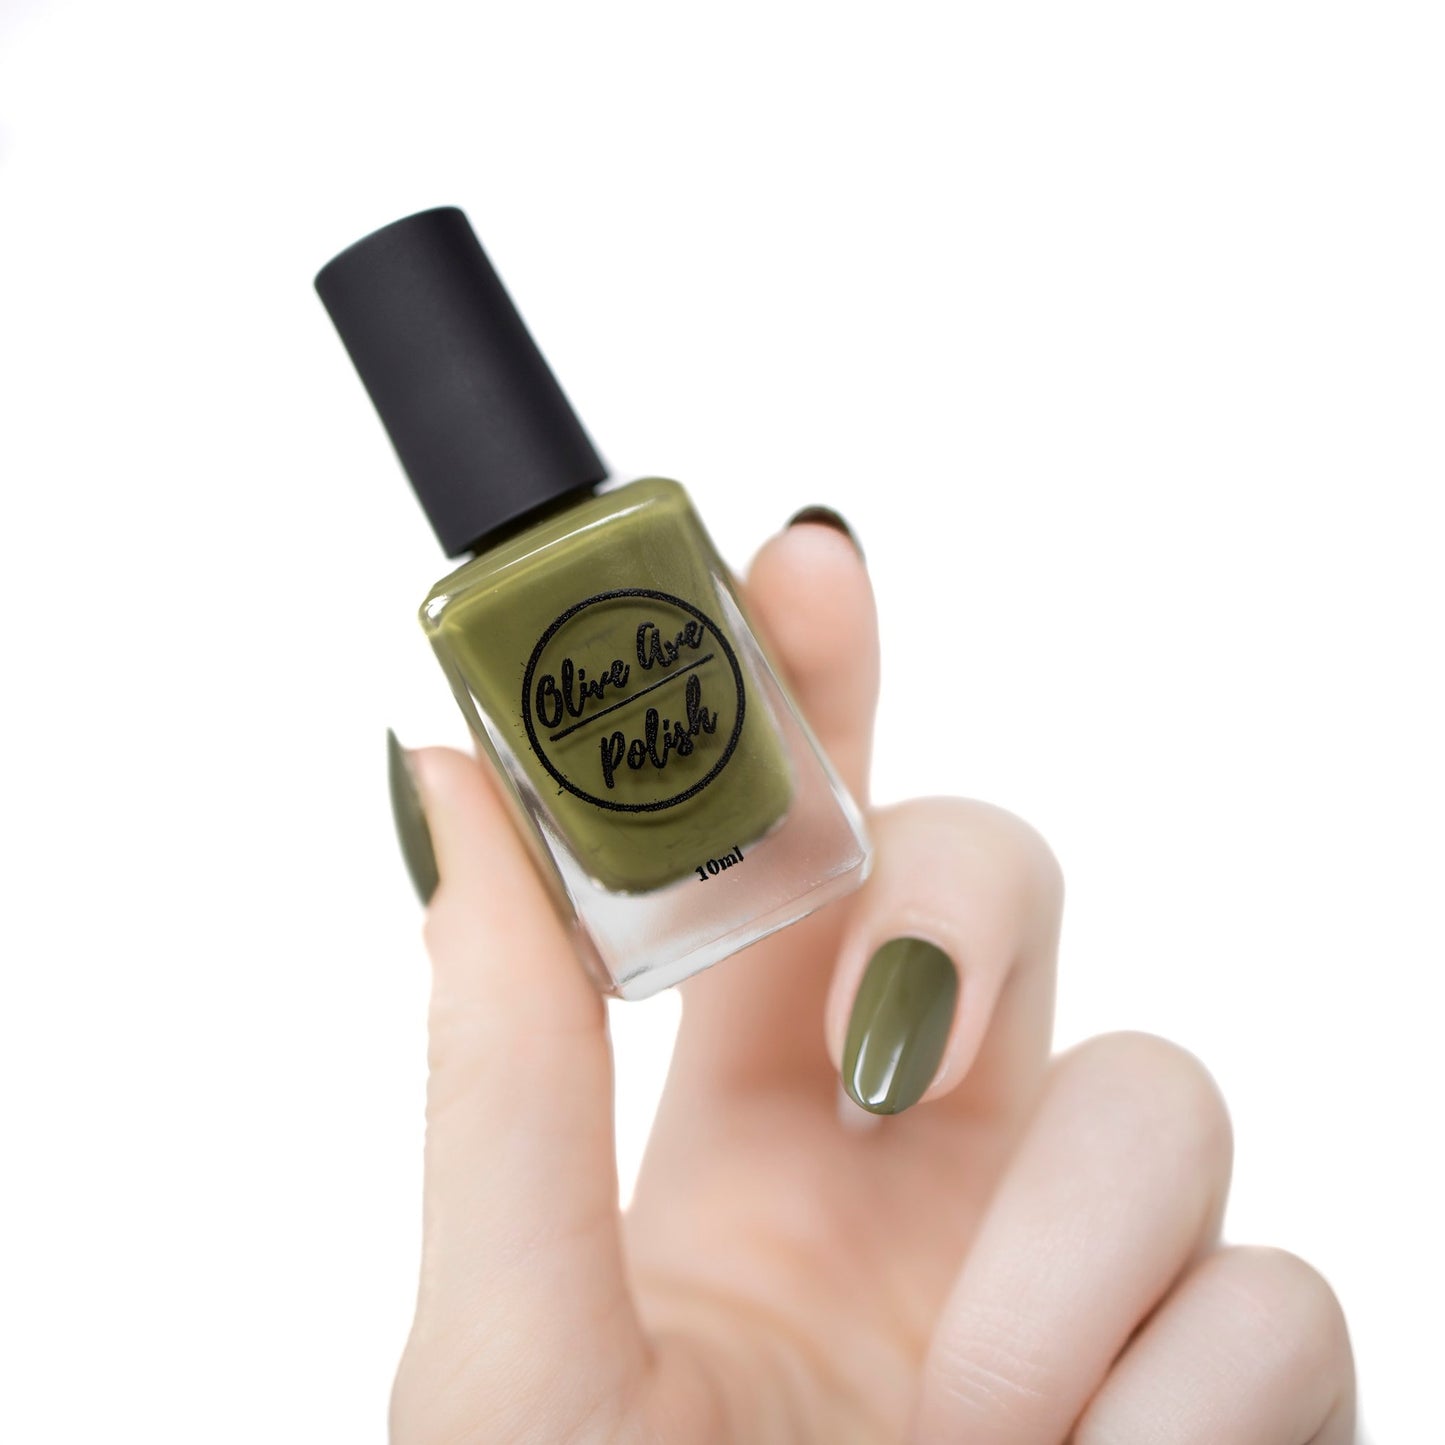 olive green nail polish swatch on pale skin tone